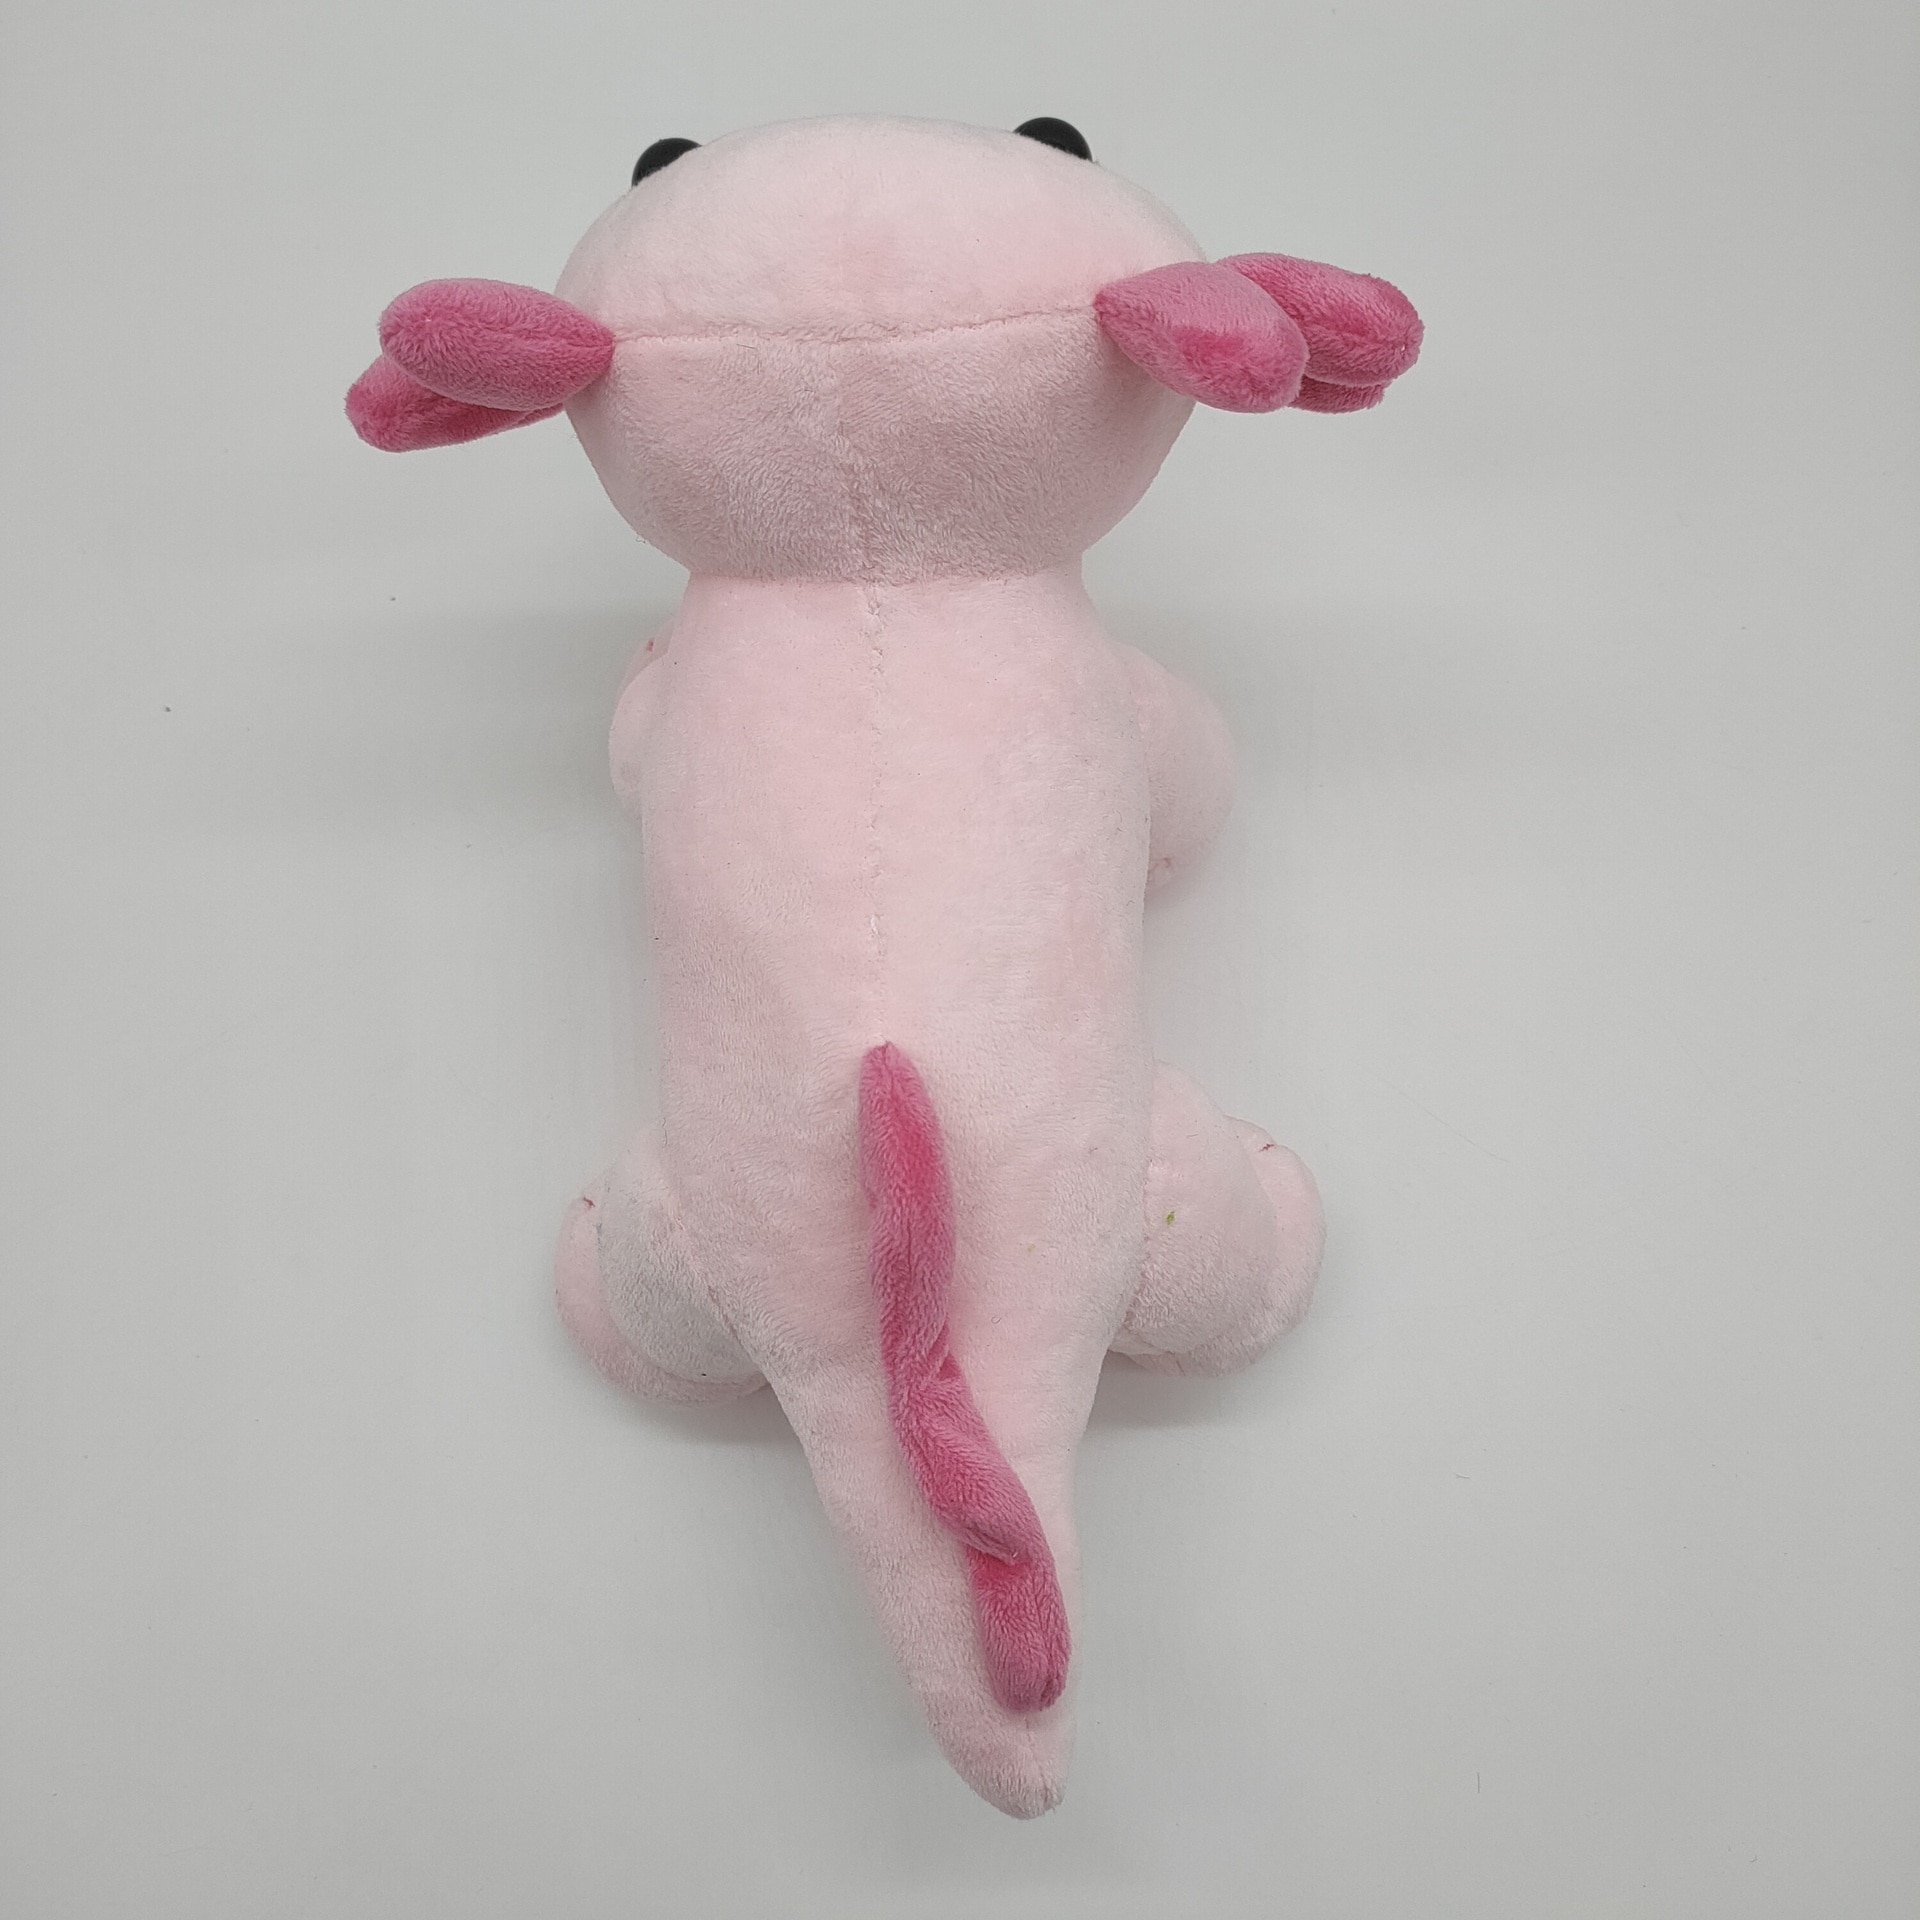 Cute Axolotl Soft Stuffed Plush Toy Ambystoma Mexicanum Pink Dinosaur Animal Model Doll Children Room Bed Decoration Toy